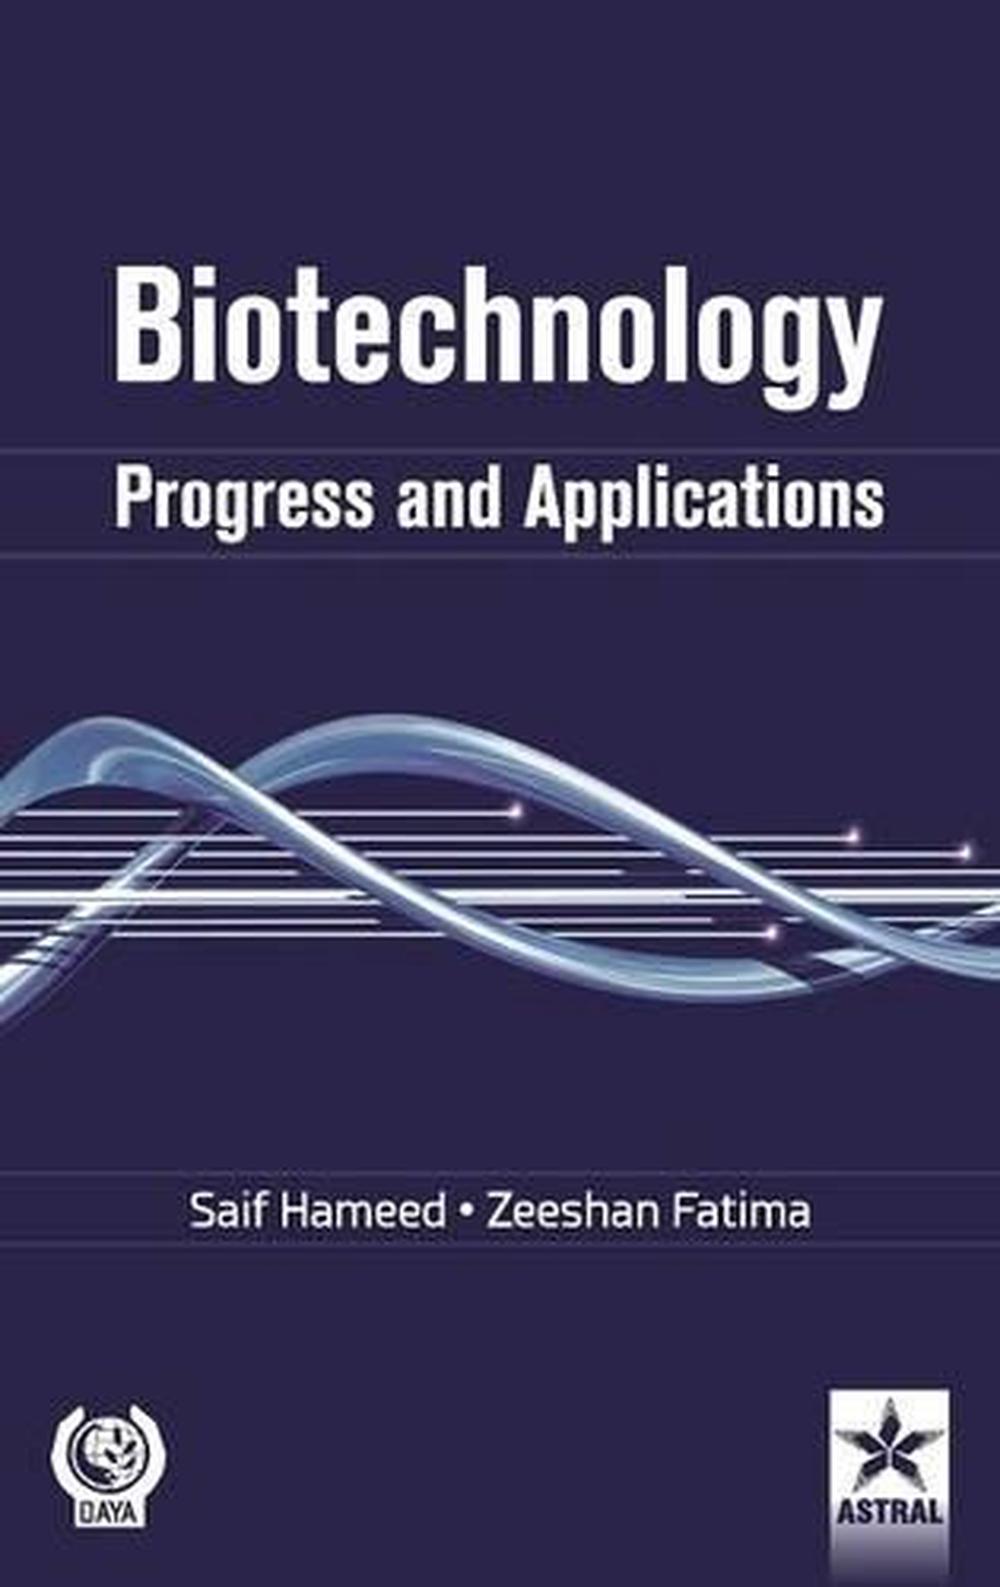 Biotech Books Biotech Biotechnology Progress and Applications by